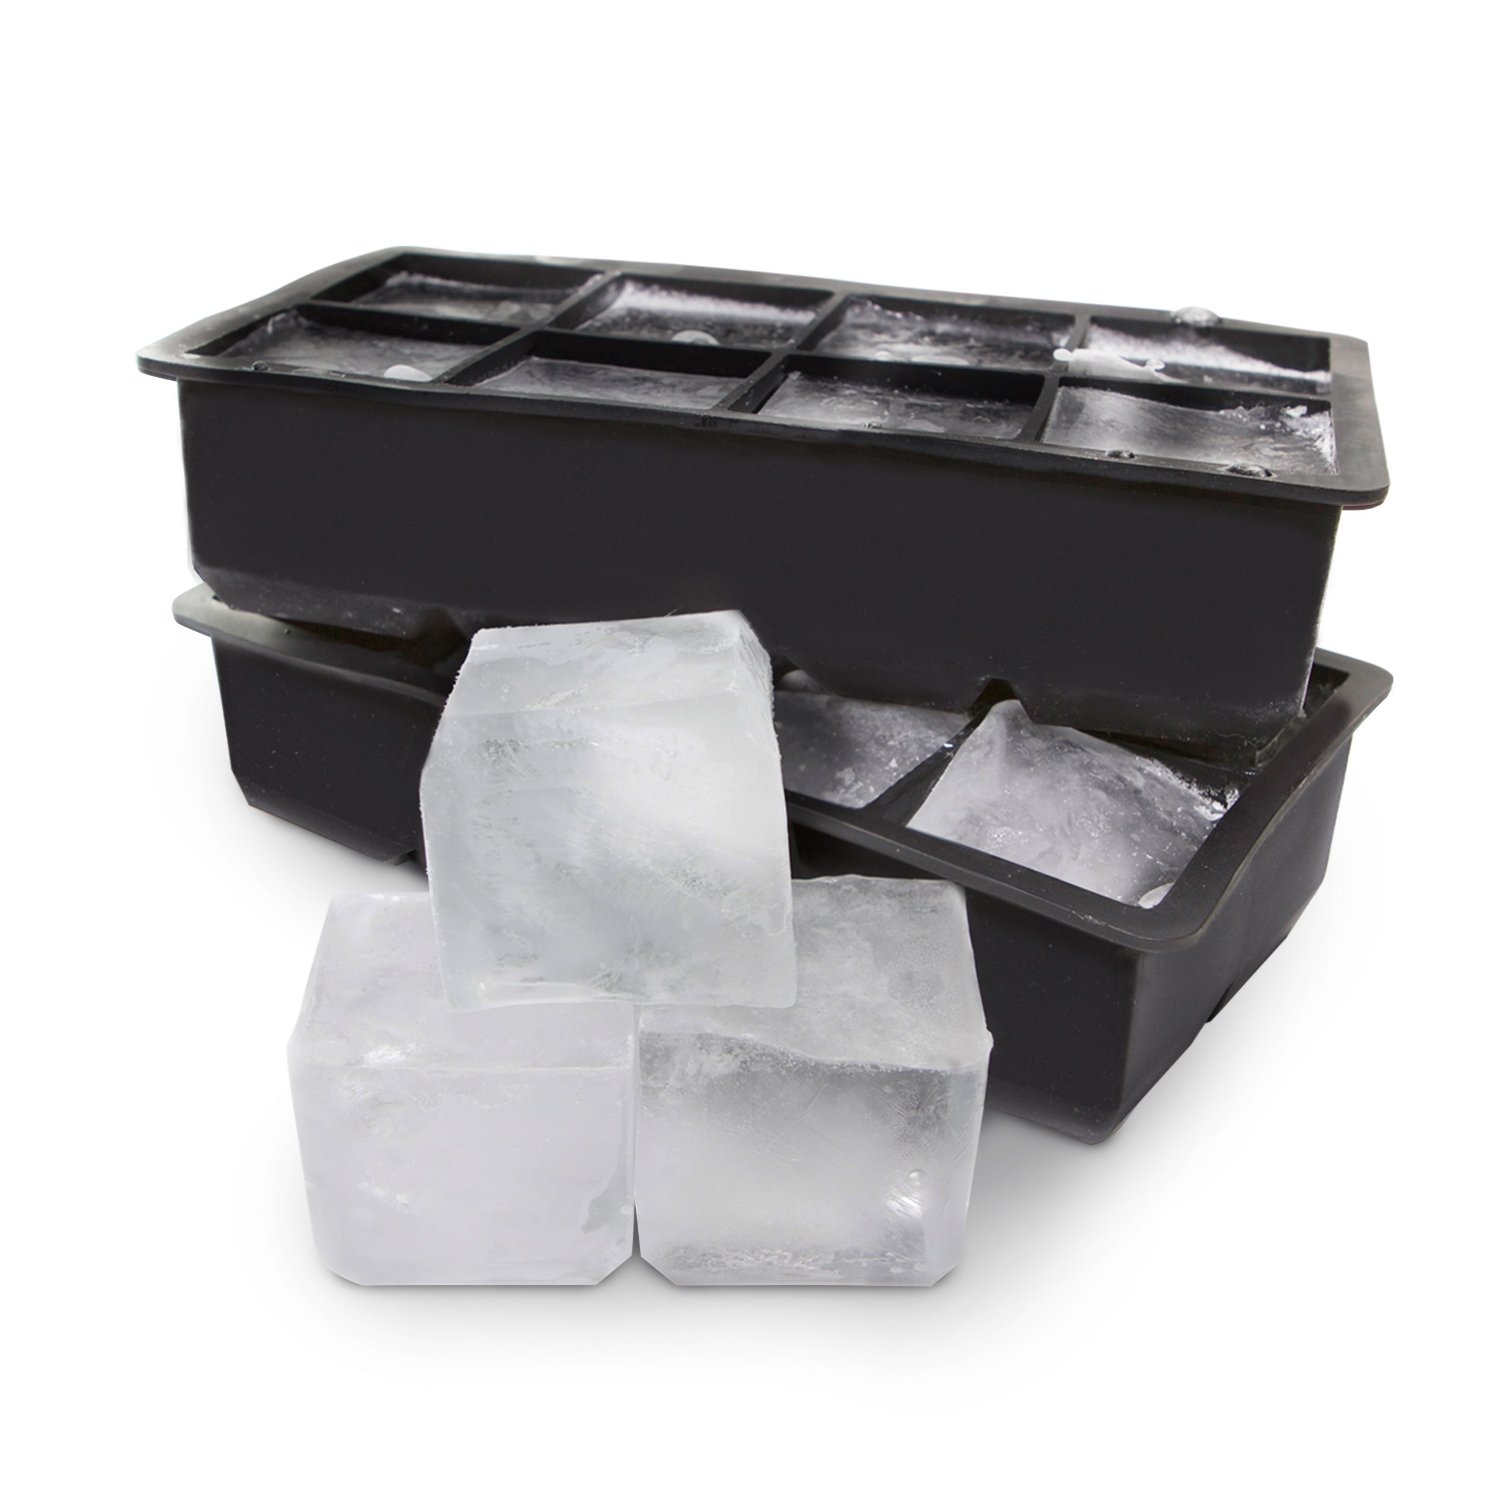 8 Cavity Jumbo Grande bandeja de gelo quadrada Bandeja de cubo de gelo de silicone FDA, bandeja de cubo de gelo, bandeja de gelo de silicone